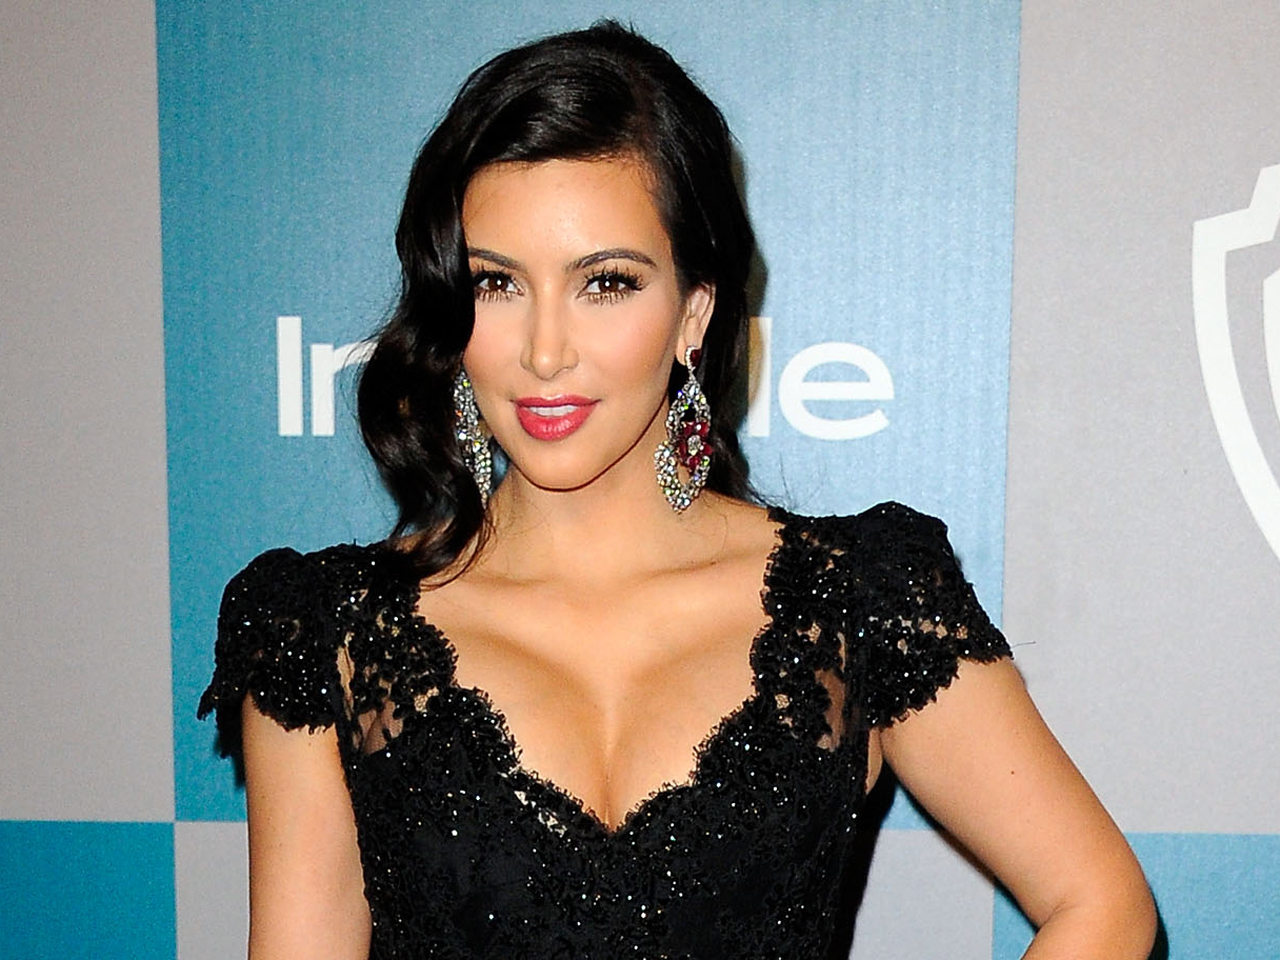 genvinde Claire Arbejdskraft Kim Kardashian to be on Lifetime show "Drop Dead Diva" - CBS News